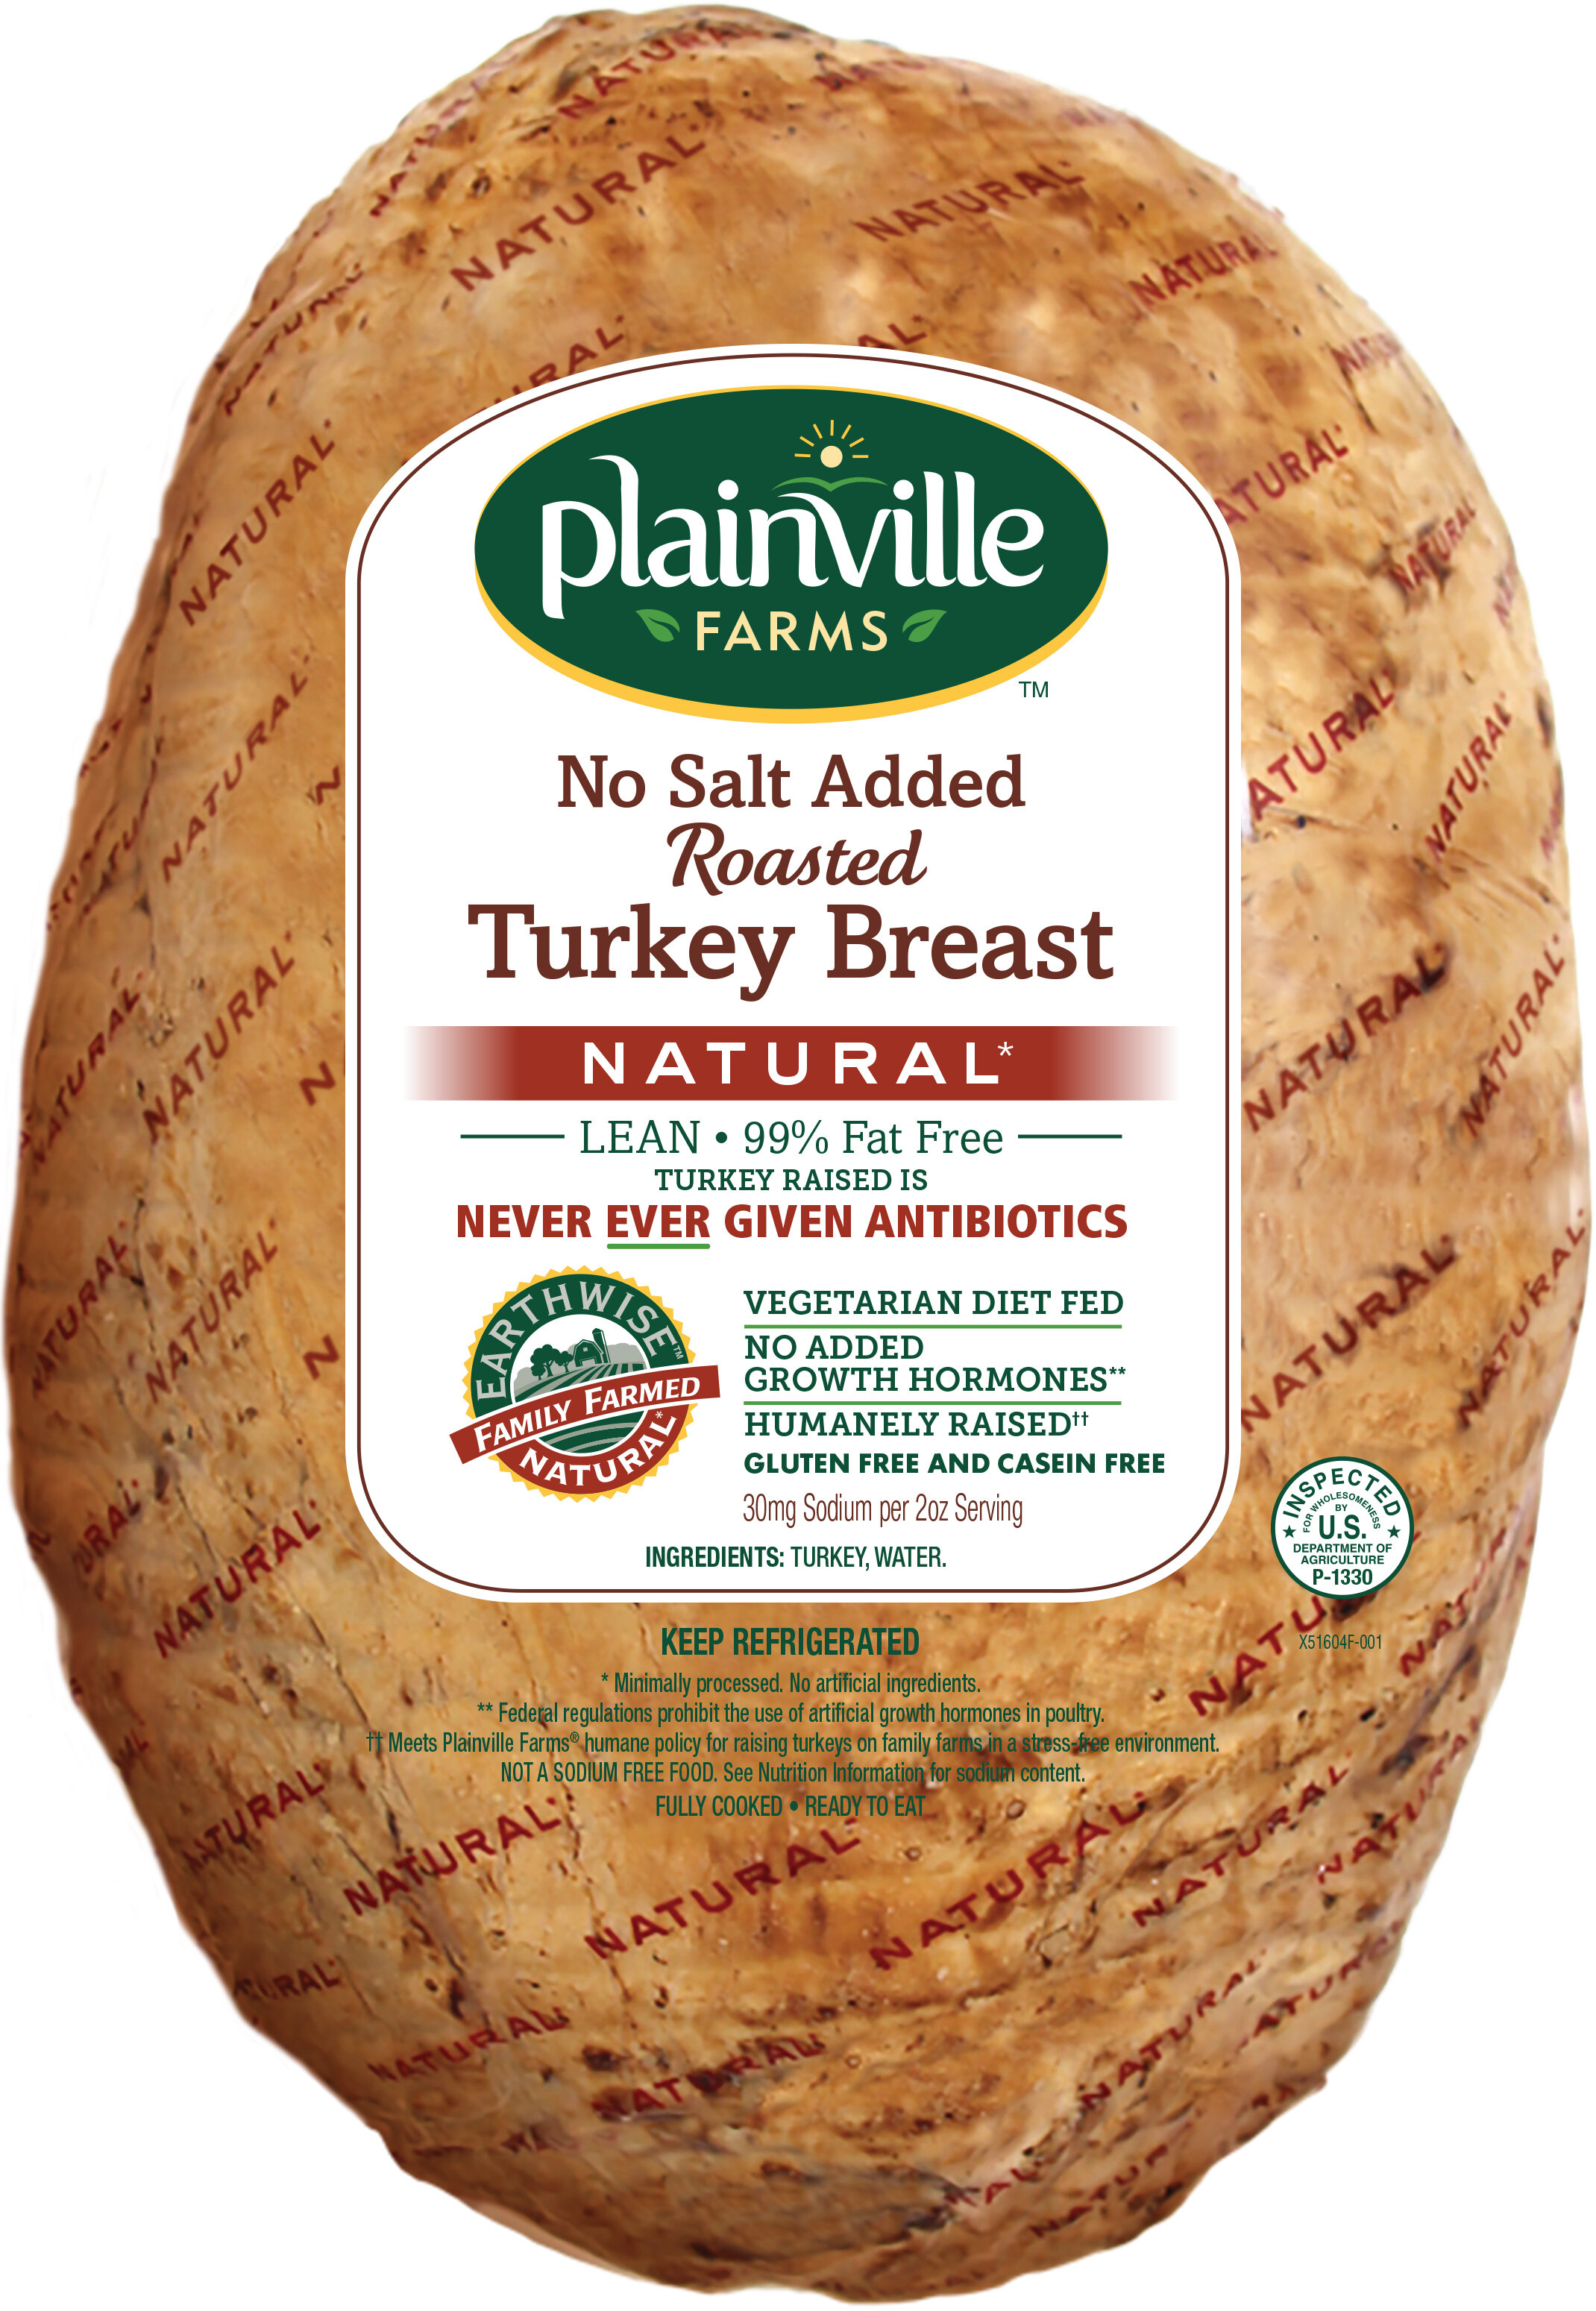 No Salt Added Turkey Breast